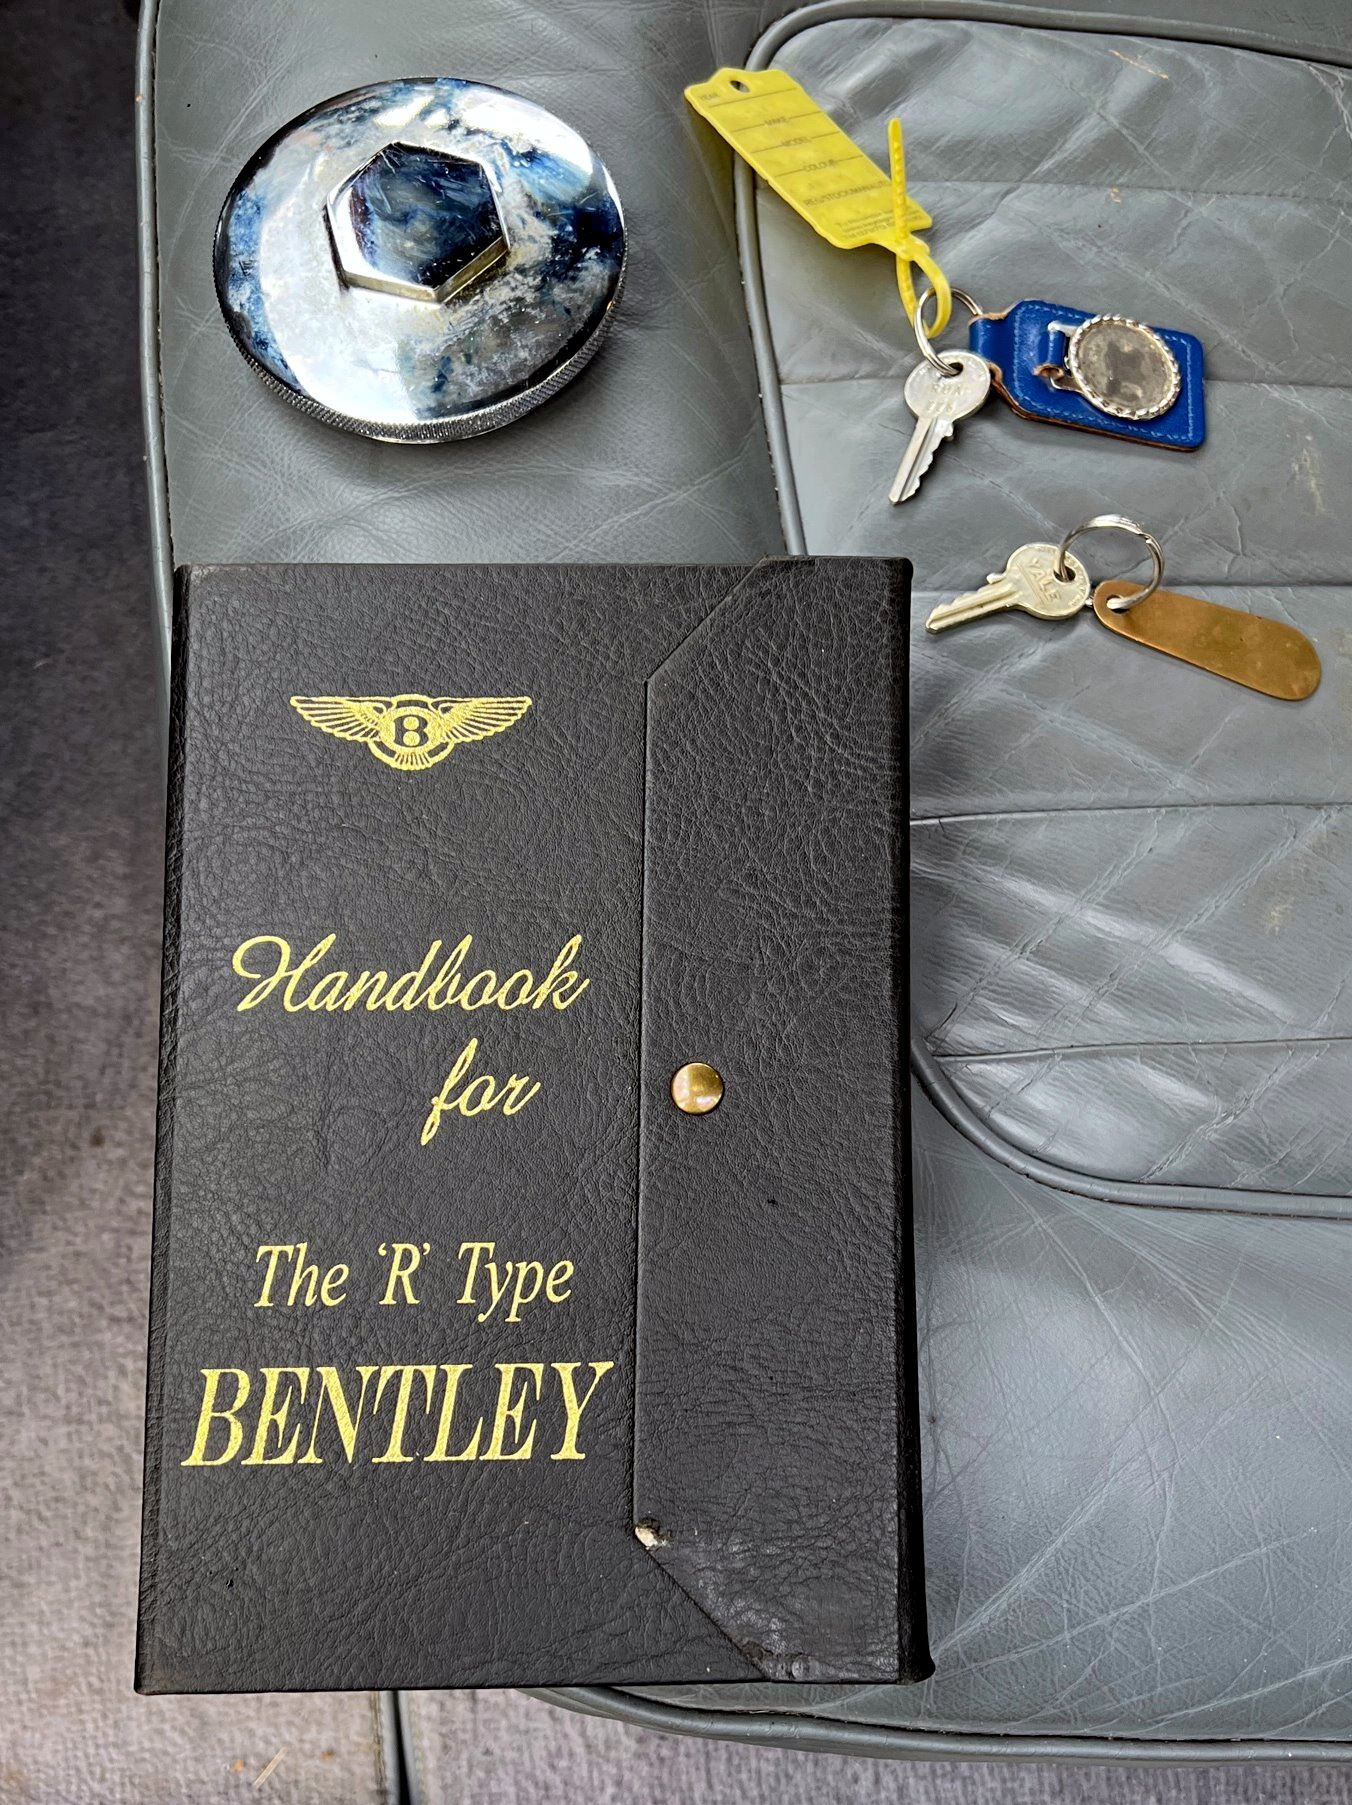 Bentley r type ny04qkqsmowj5g9easg0u